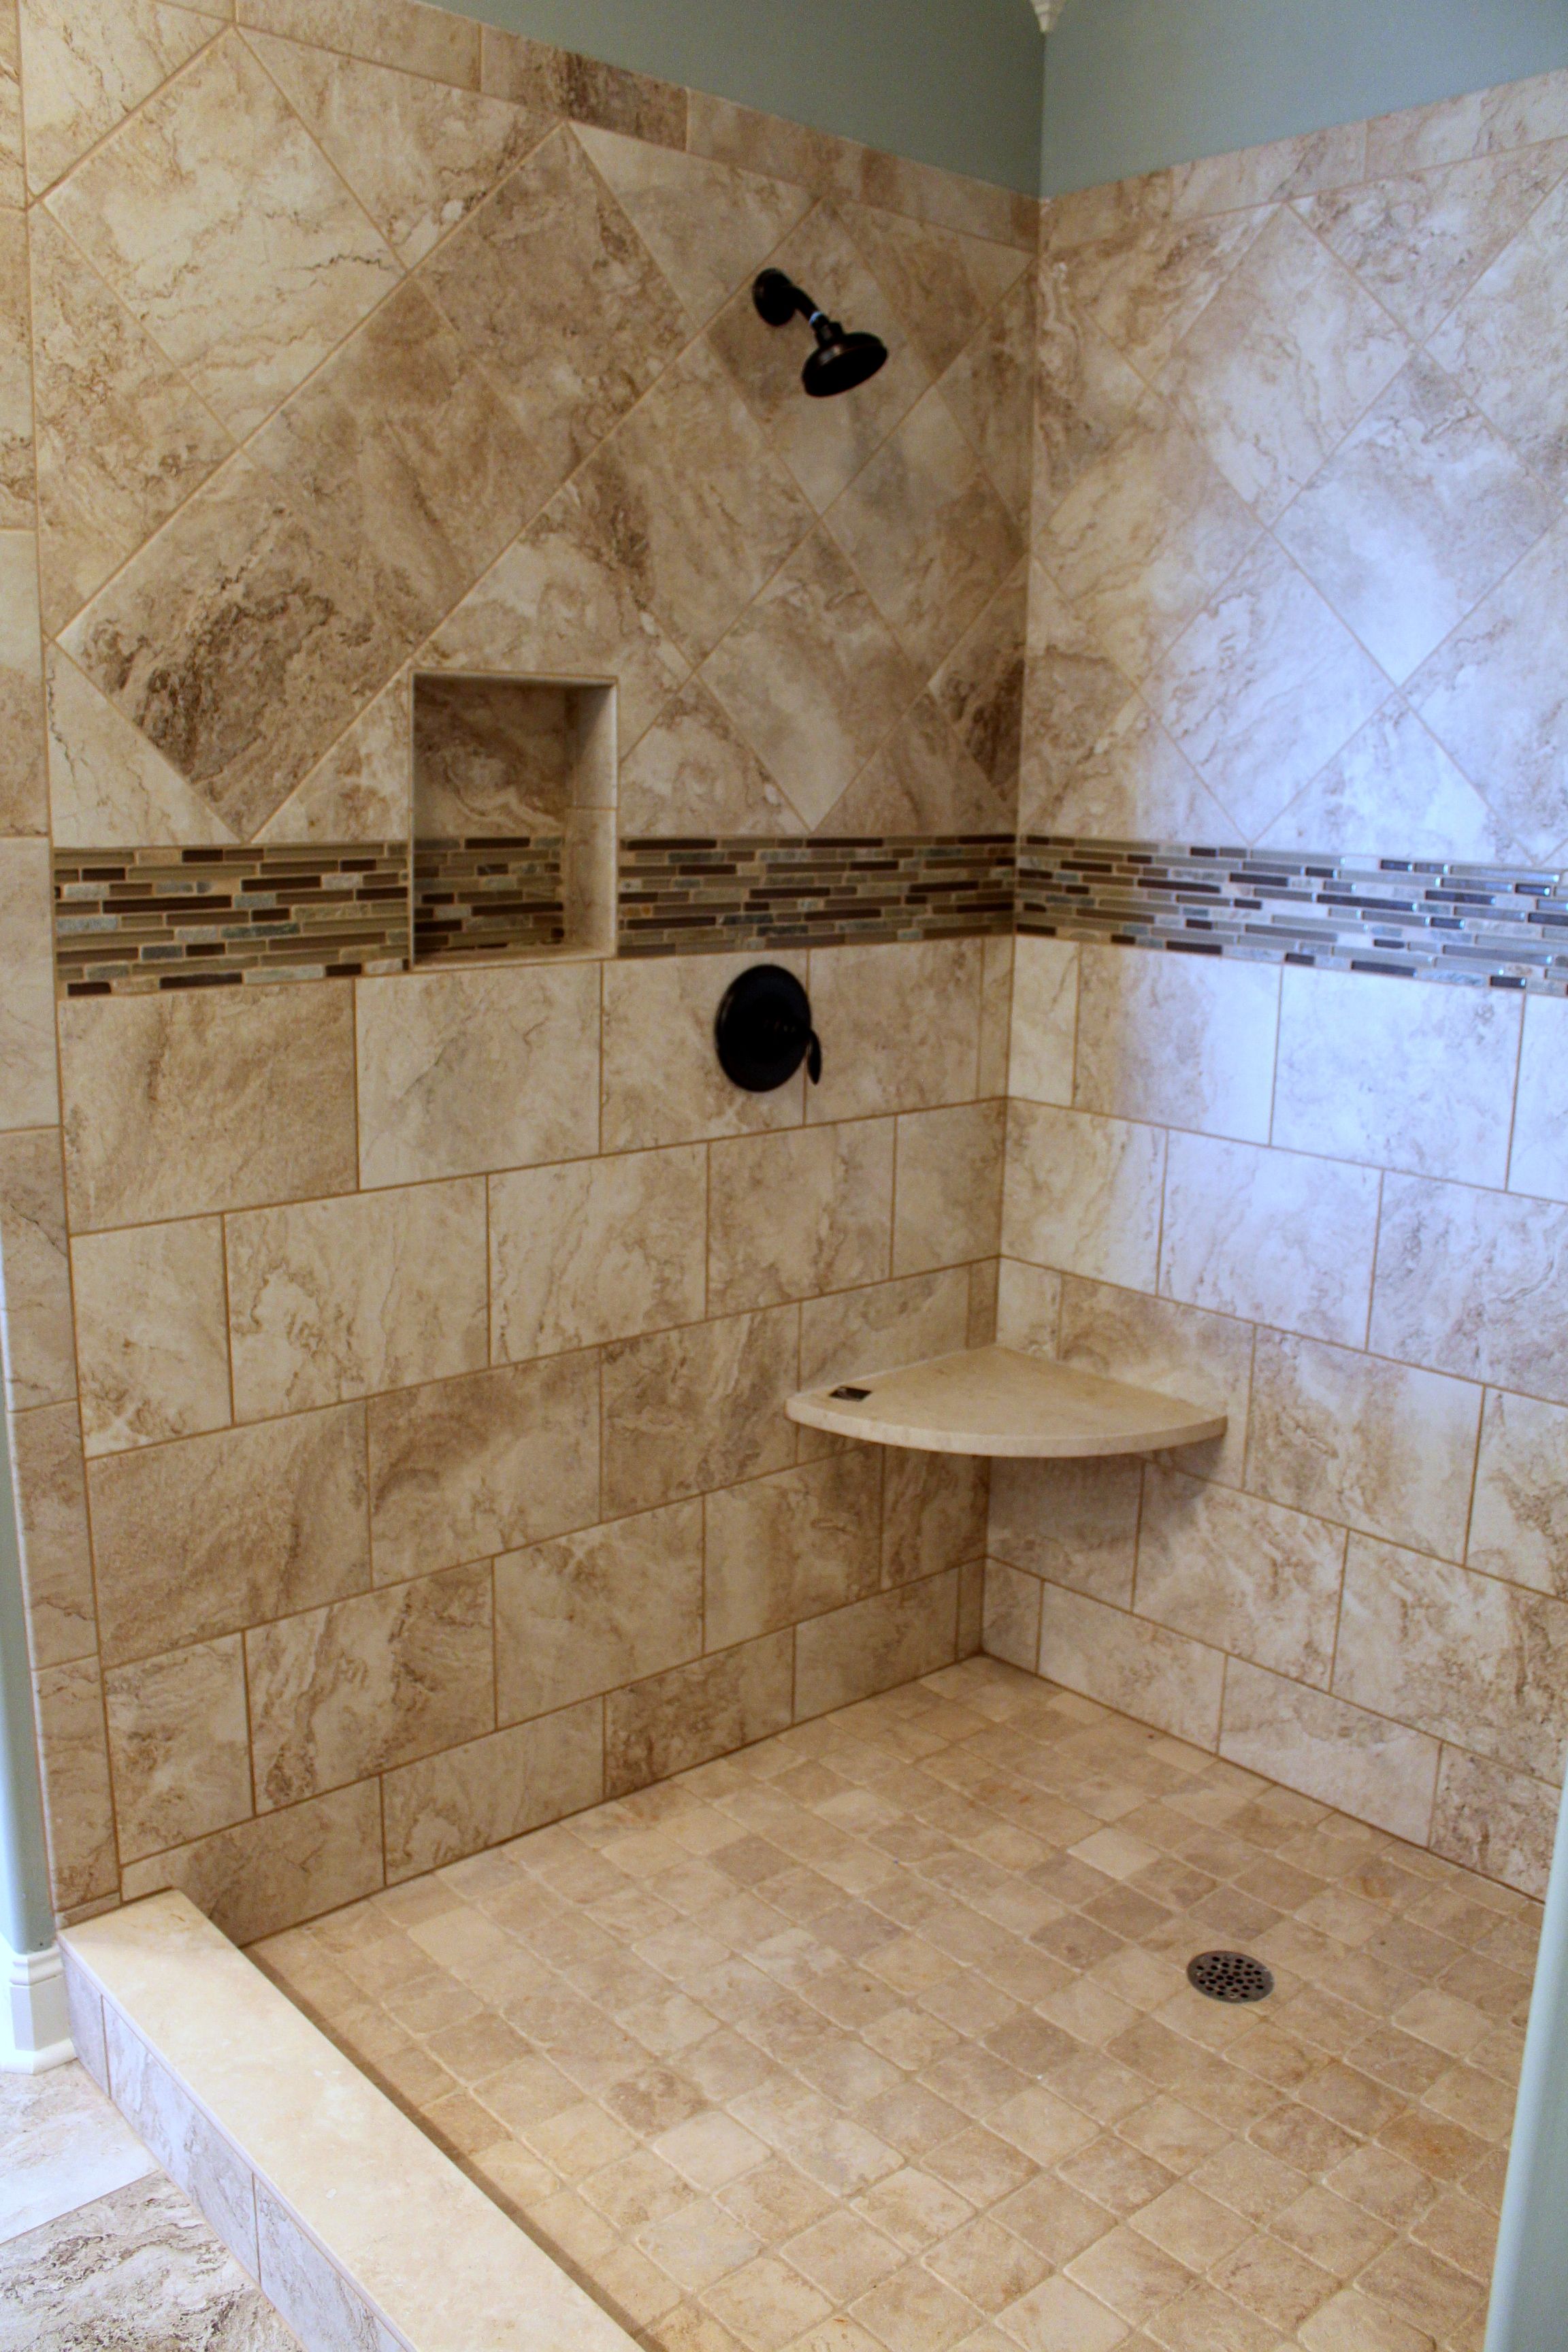 img/bathroom-tile-floor-height.jpg